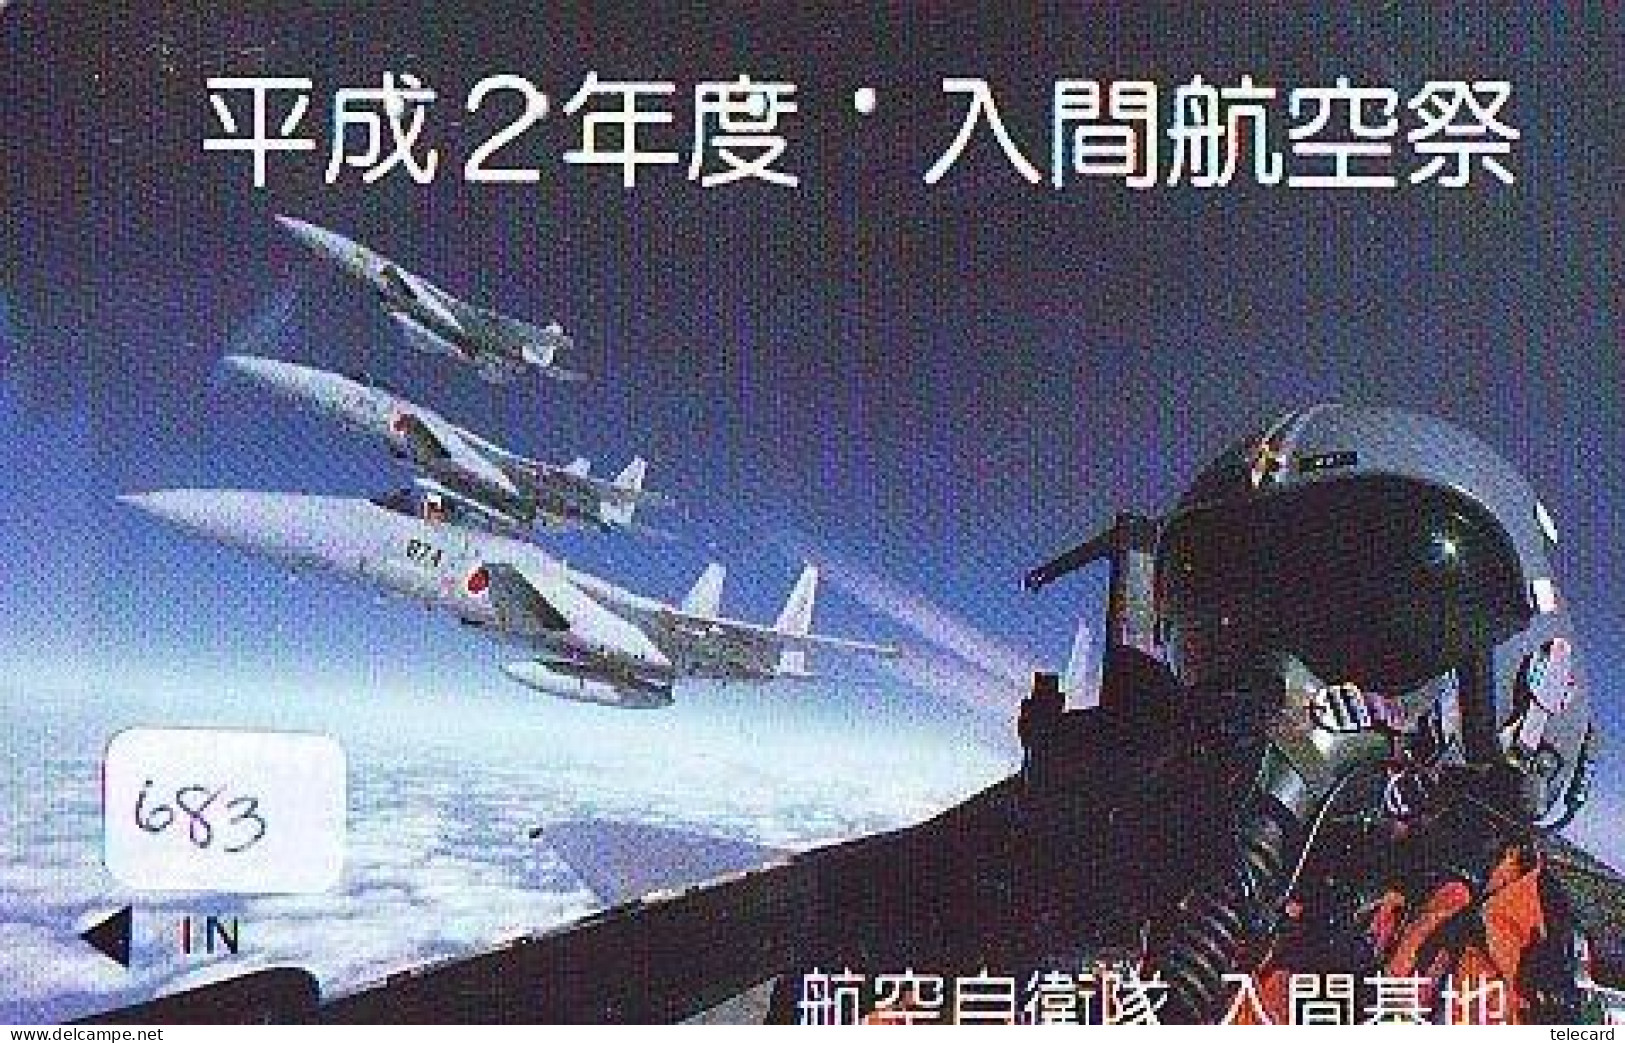 TELECARTE JAPON * MILITAIRY AVION  (683)  Flugzeuge * Airplane * Aeroplano * PHONECARD JAPAN * ARMEE * LEGER VLIEGTUIG - Army